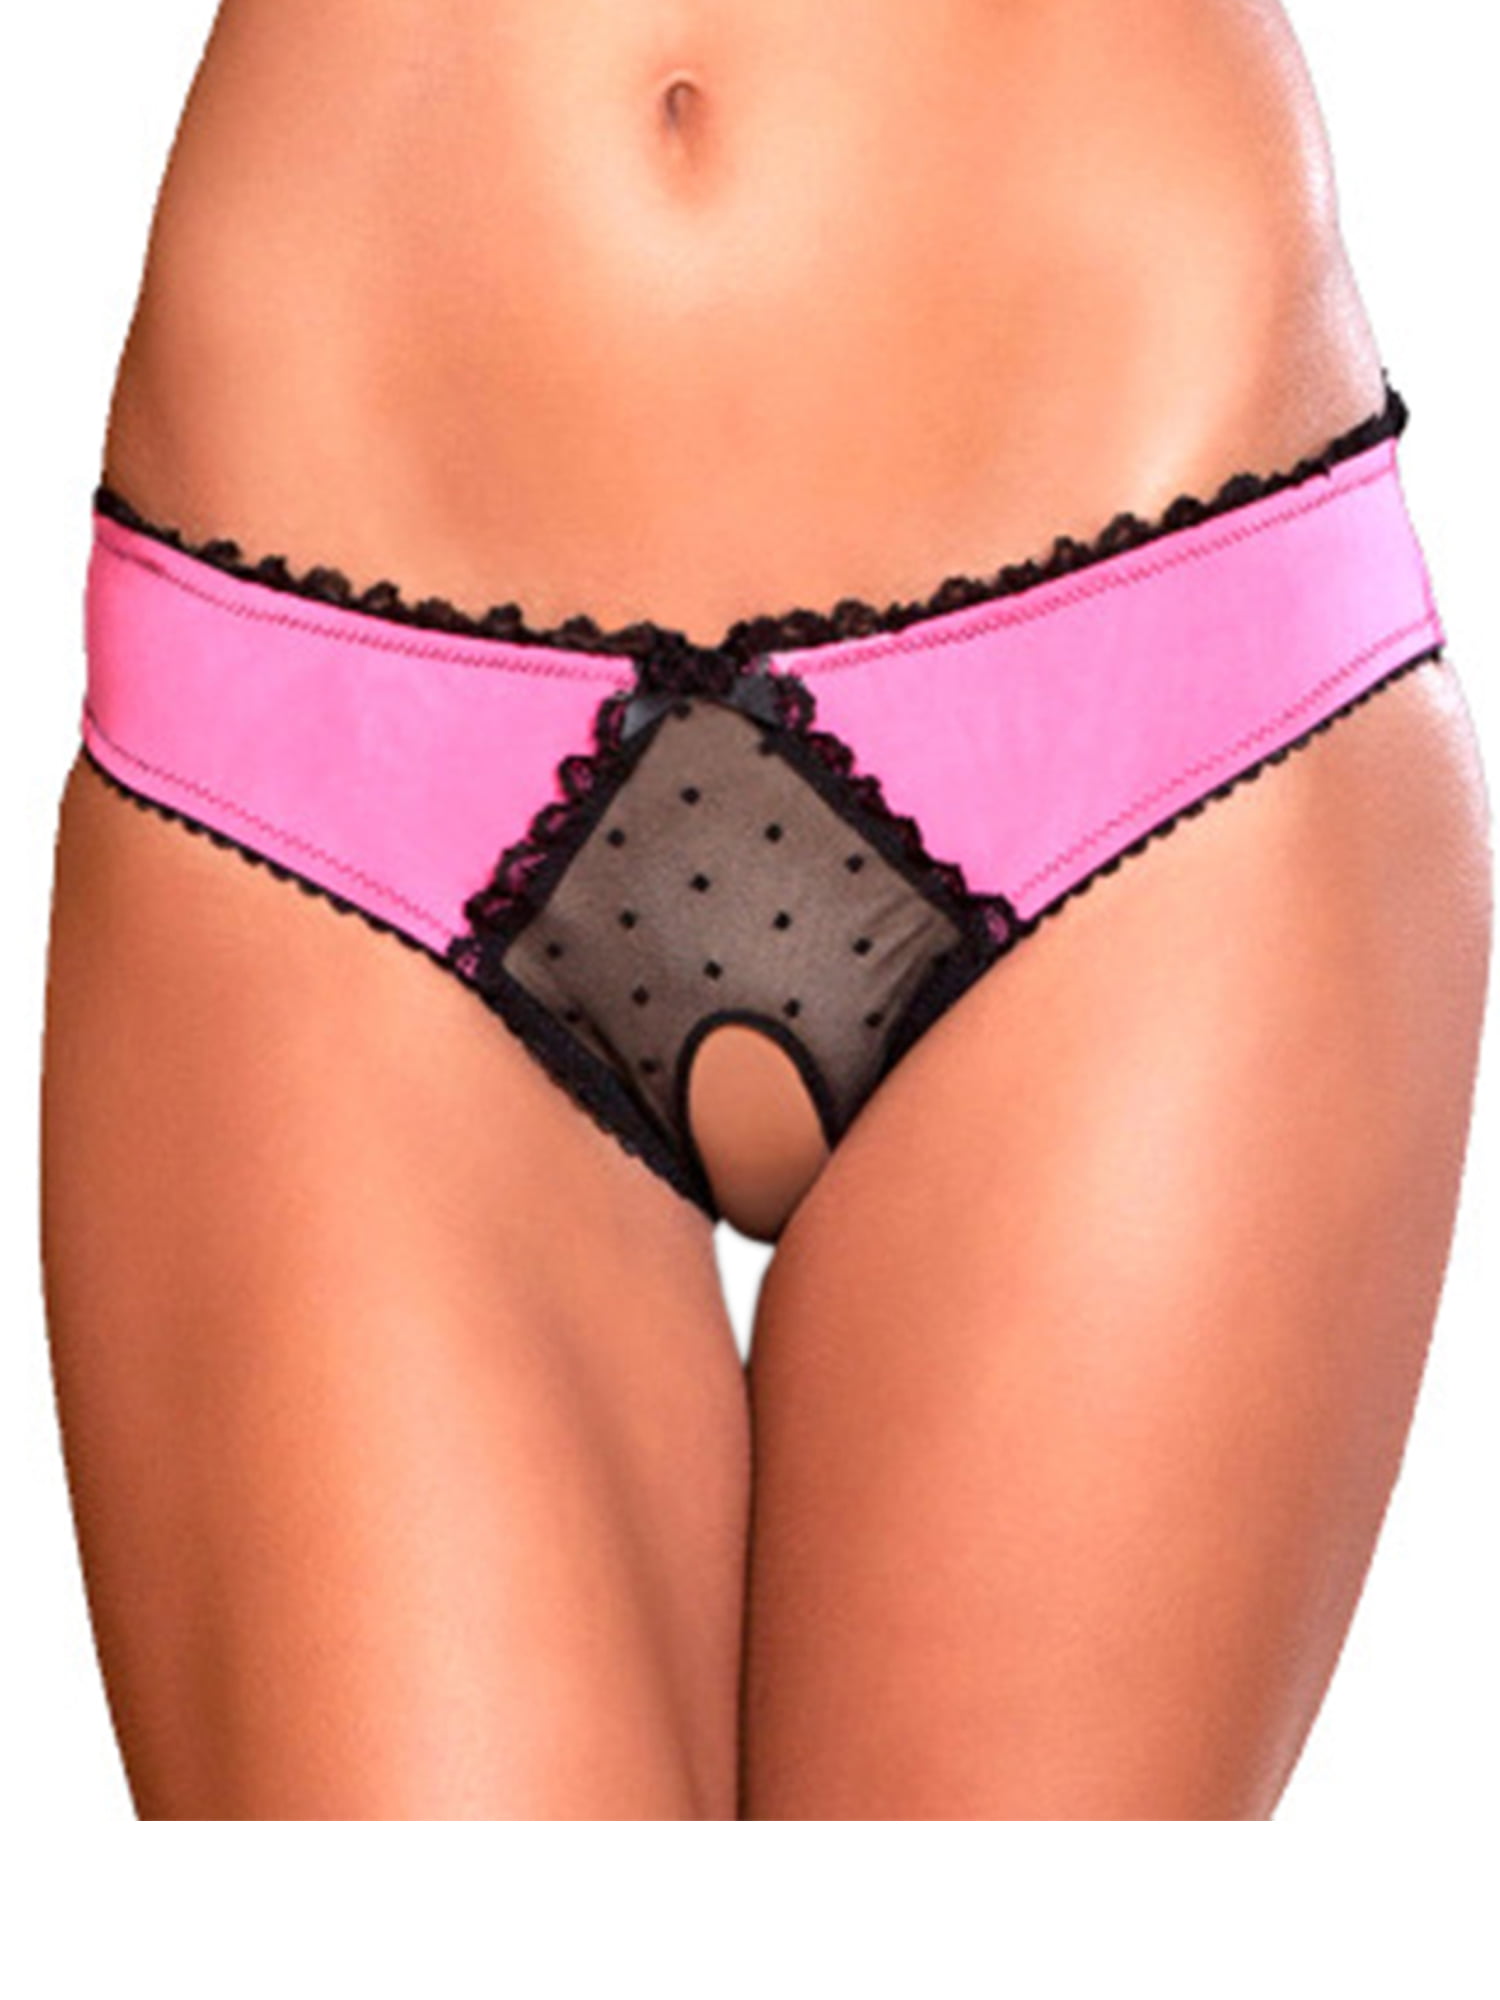 Details about   Women Lace Panties Crotchless Underwear Fashion Lingerie G-string Floral Briefs